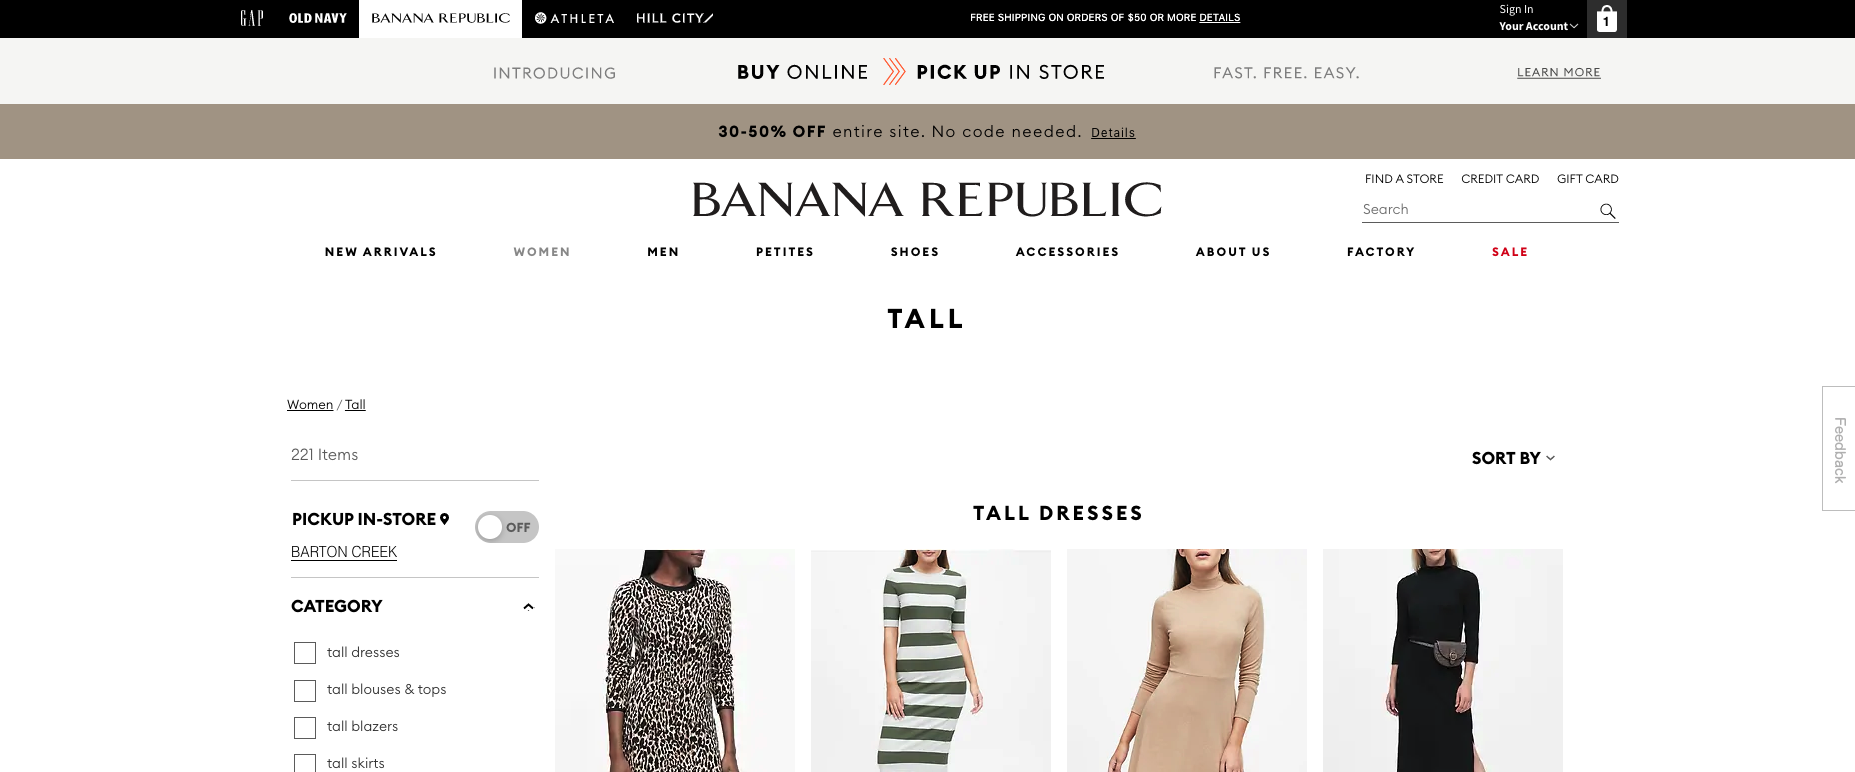 banana republic clothing for tall women